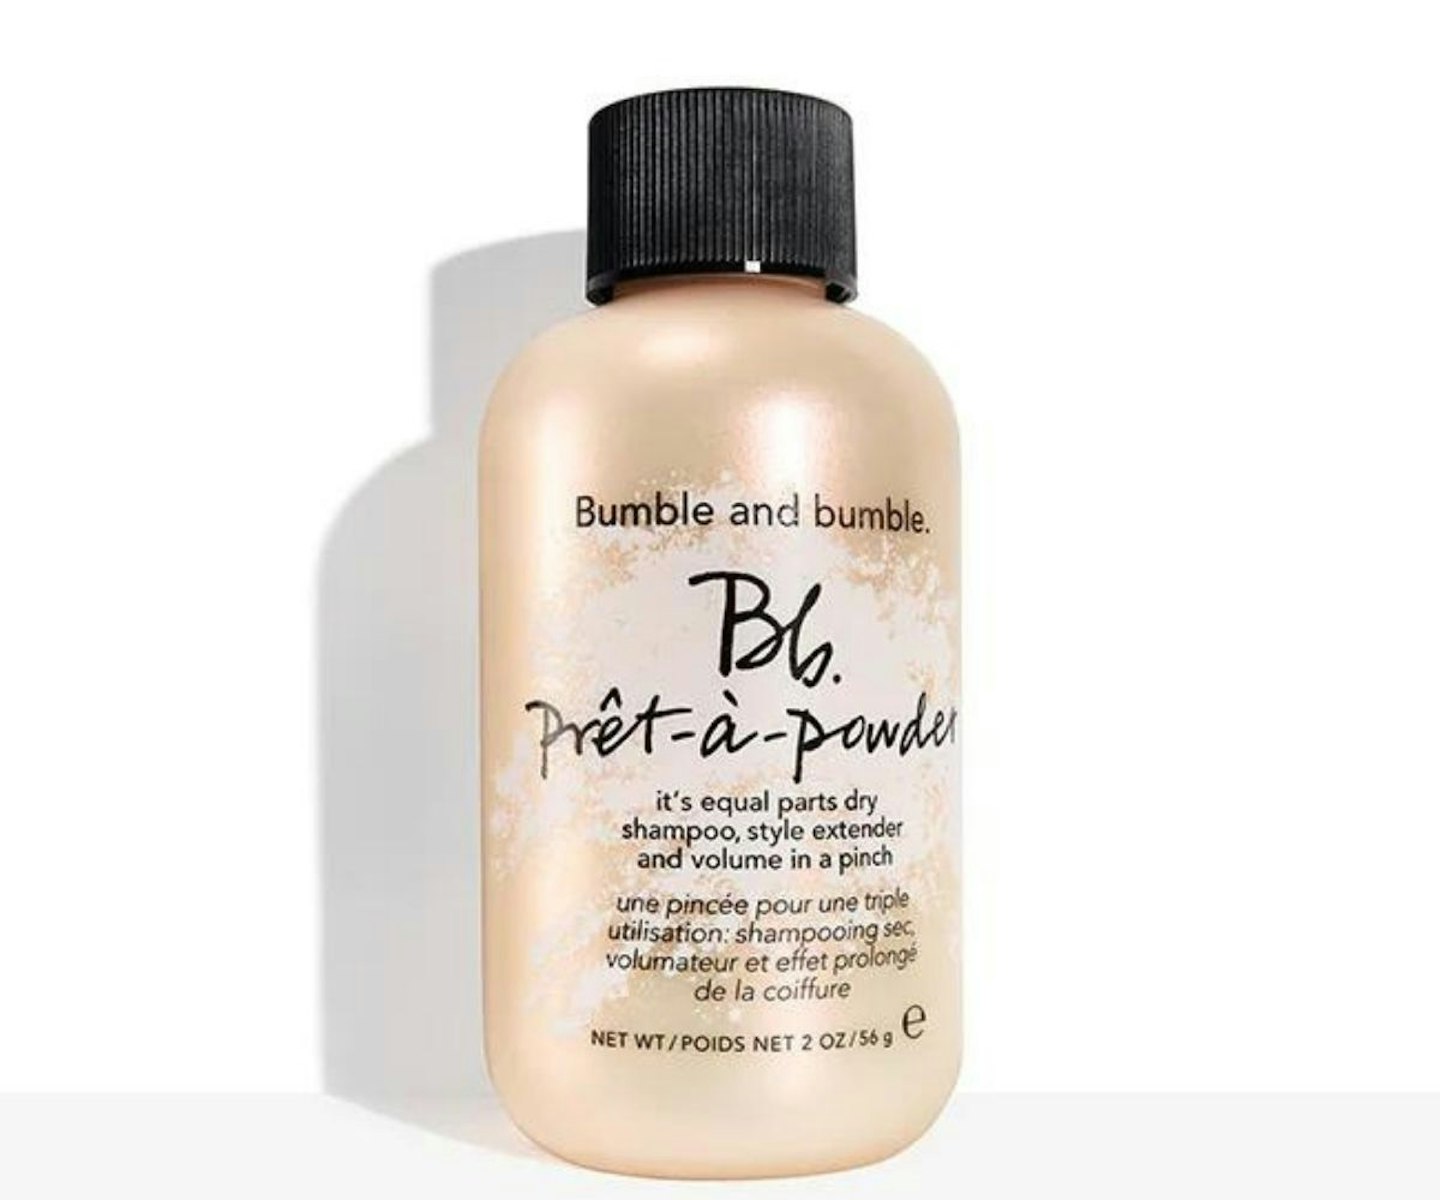 Pru00eat-u00e0-powder Dry Shampoo